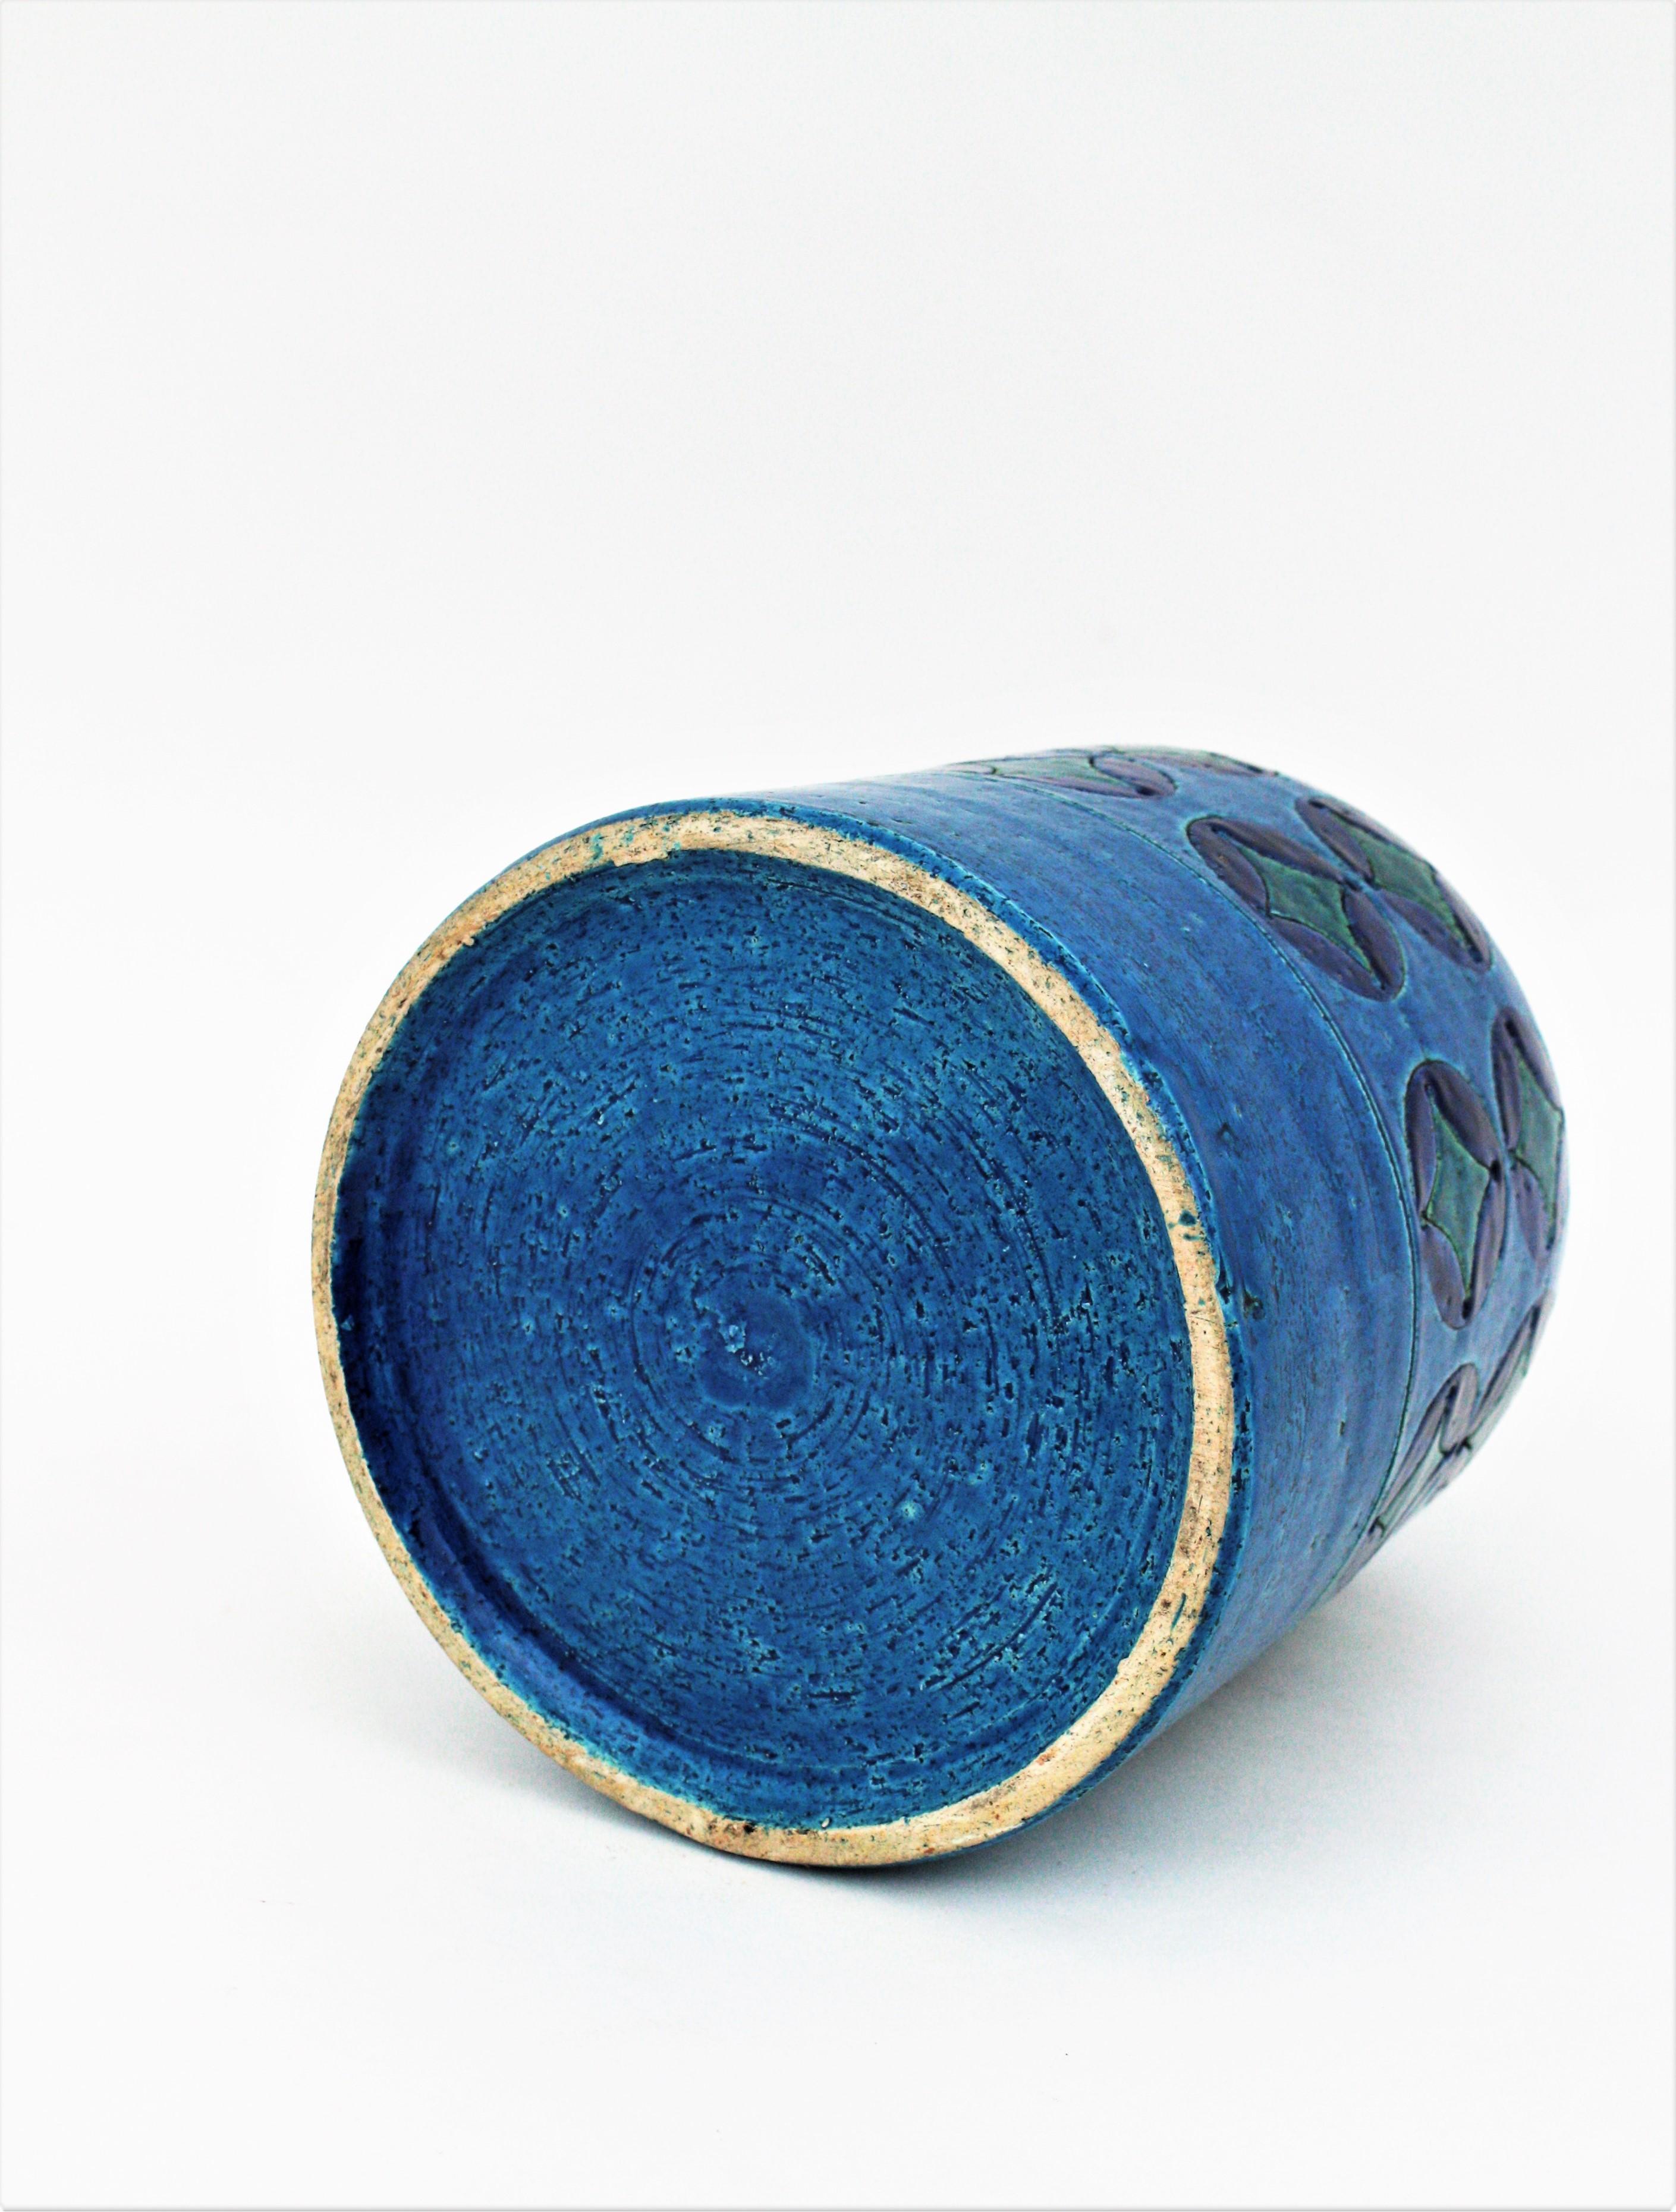 Bitossi Aldo Londi Blue Ceramic Large Bottle Vase with Circles & Rhombus Pattern For Sale 2